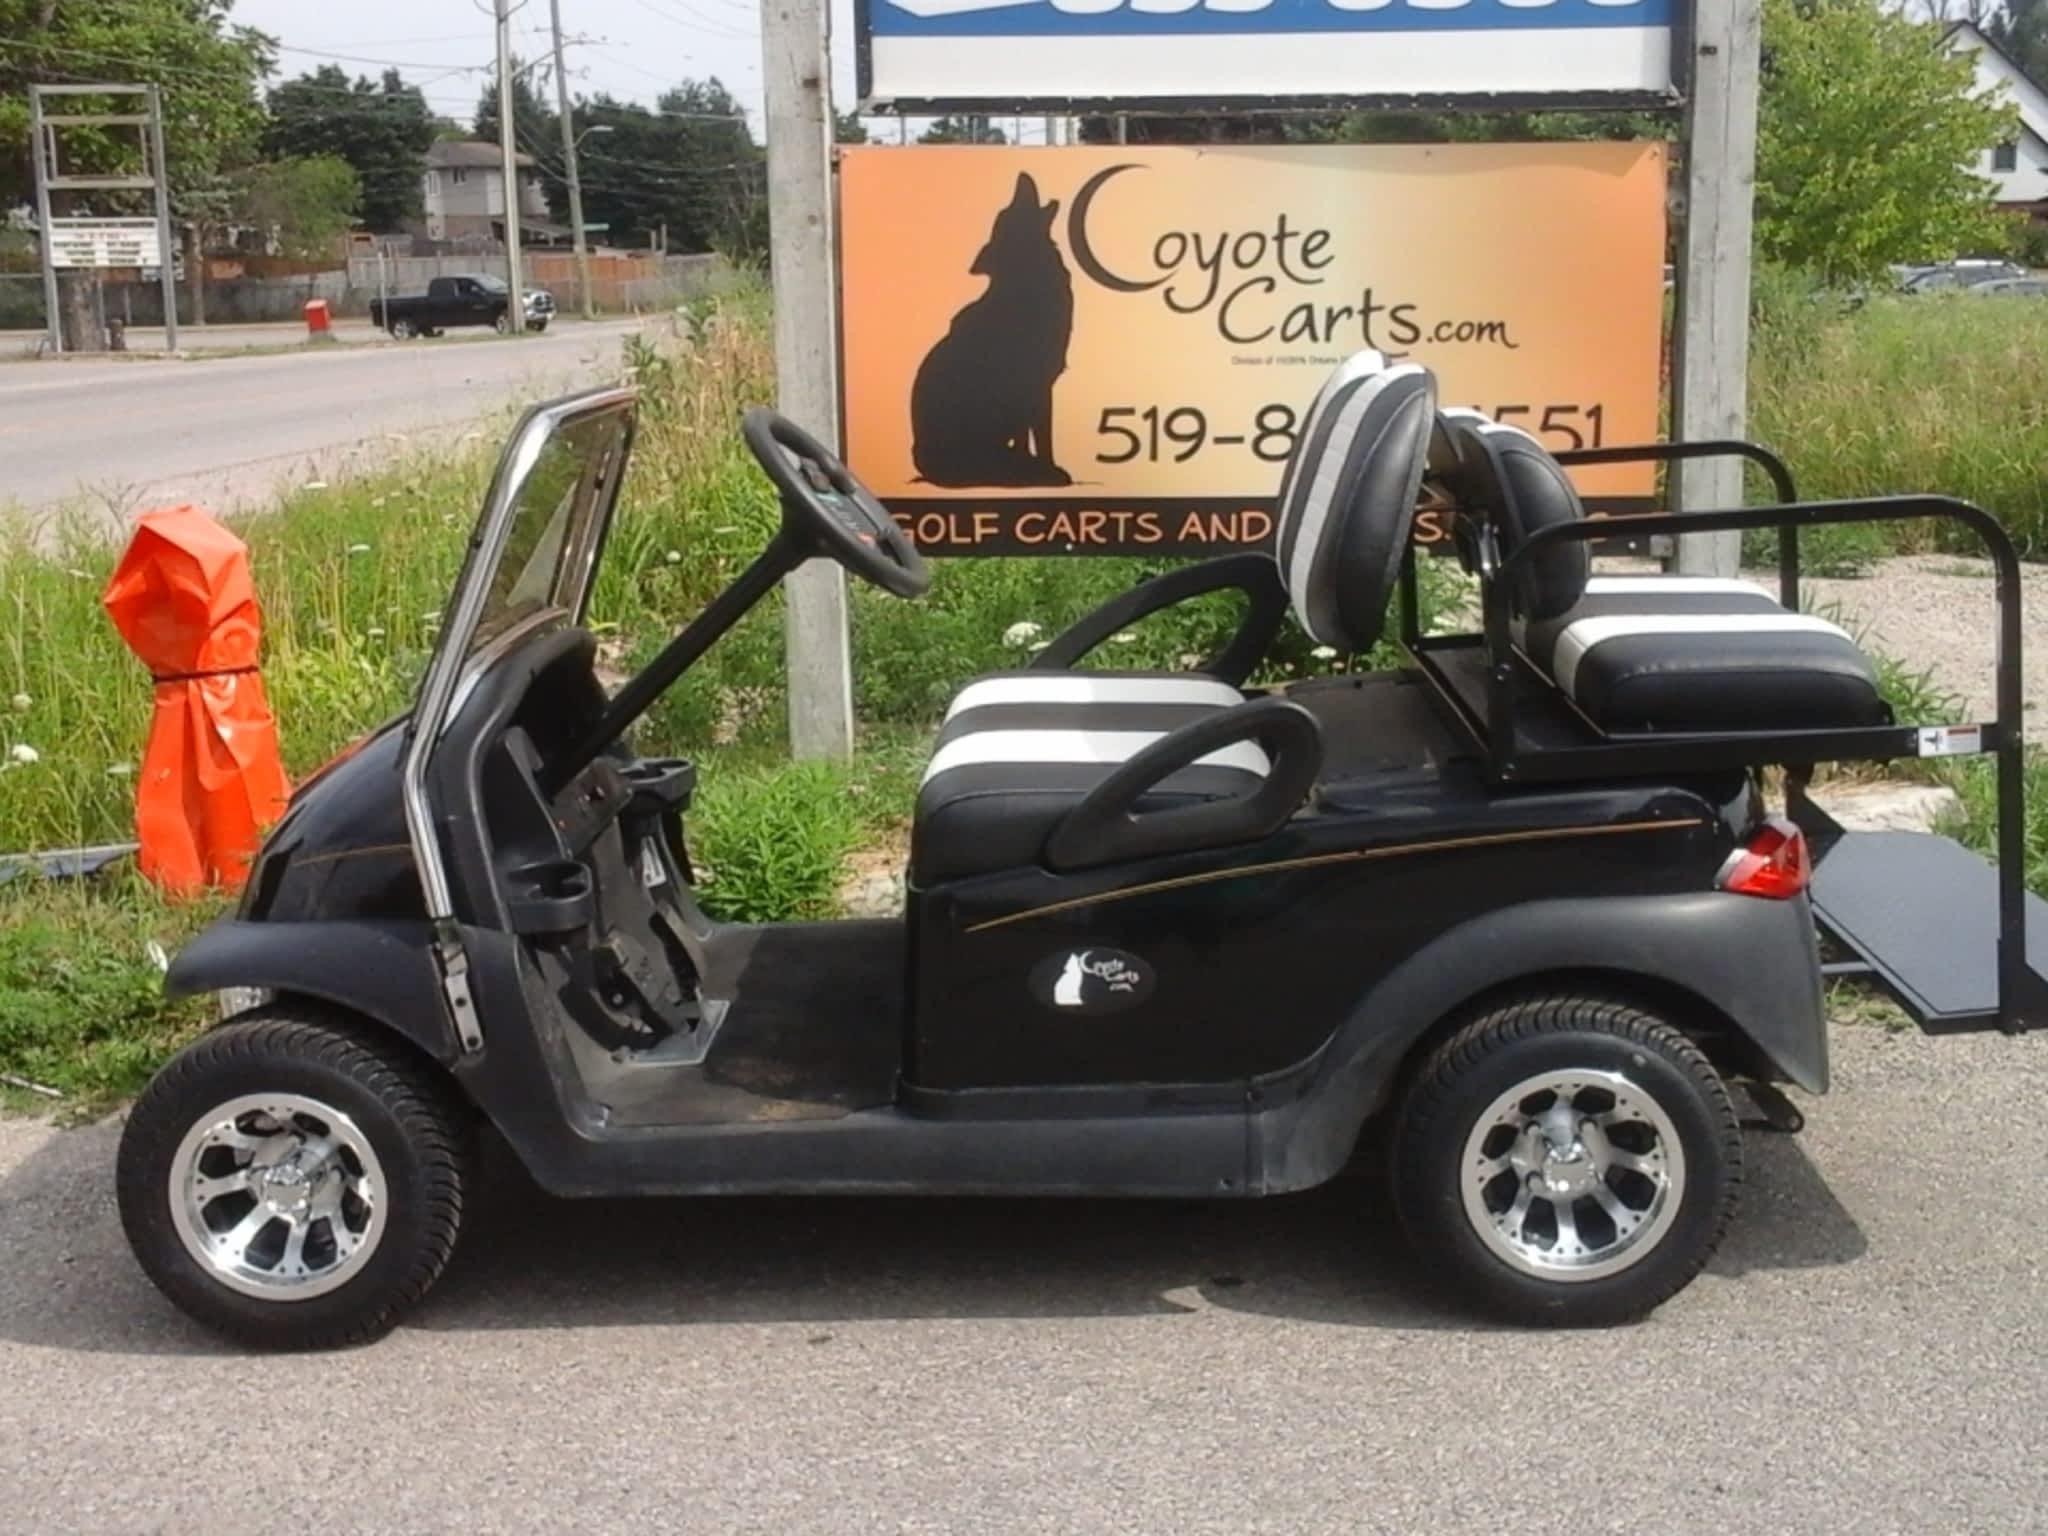 photo Coyote Carts